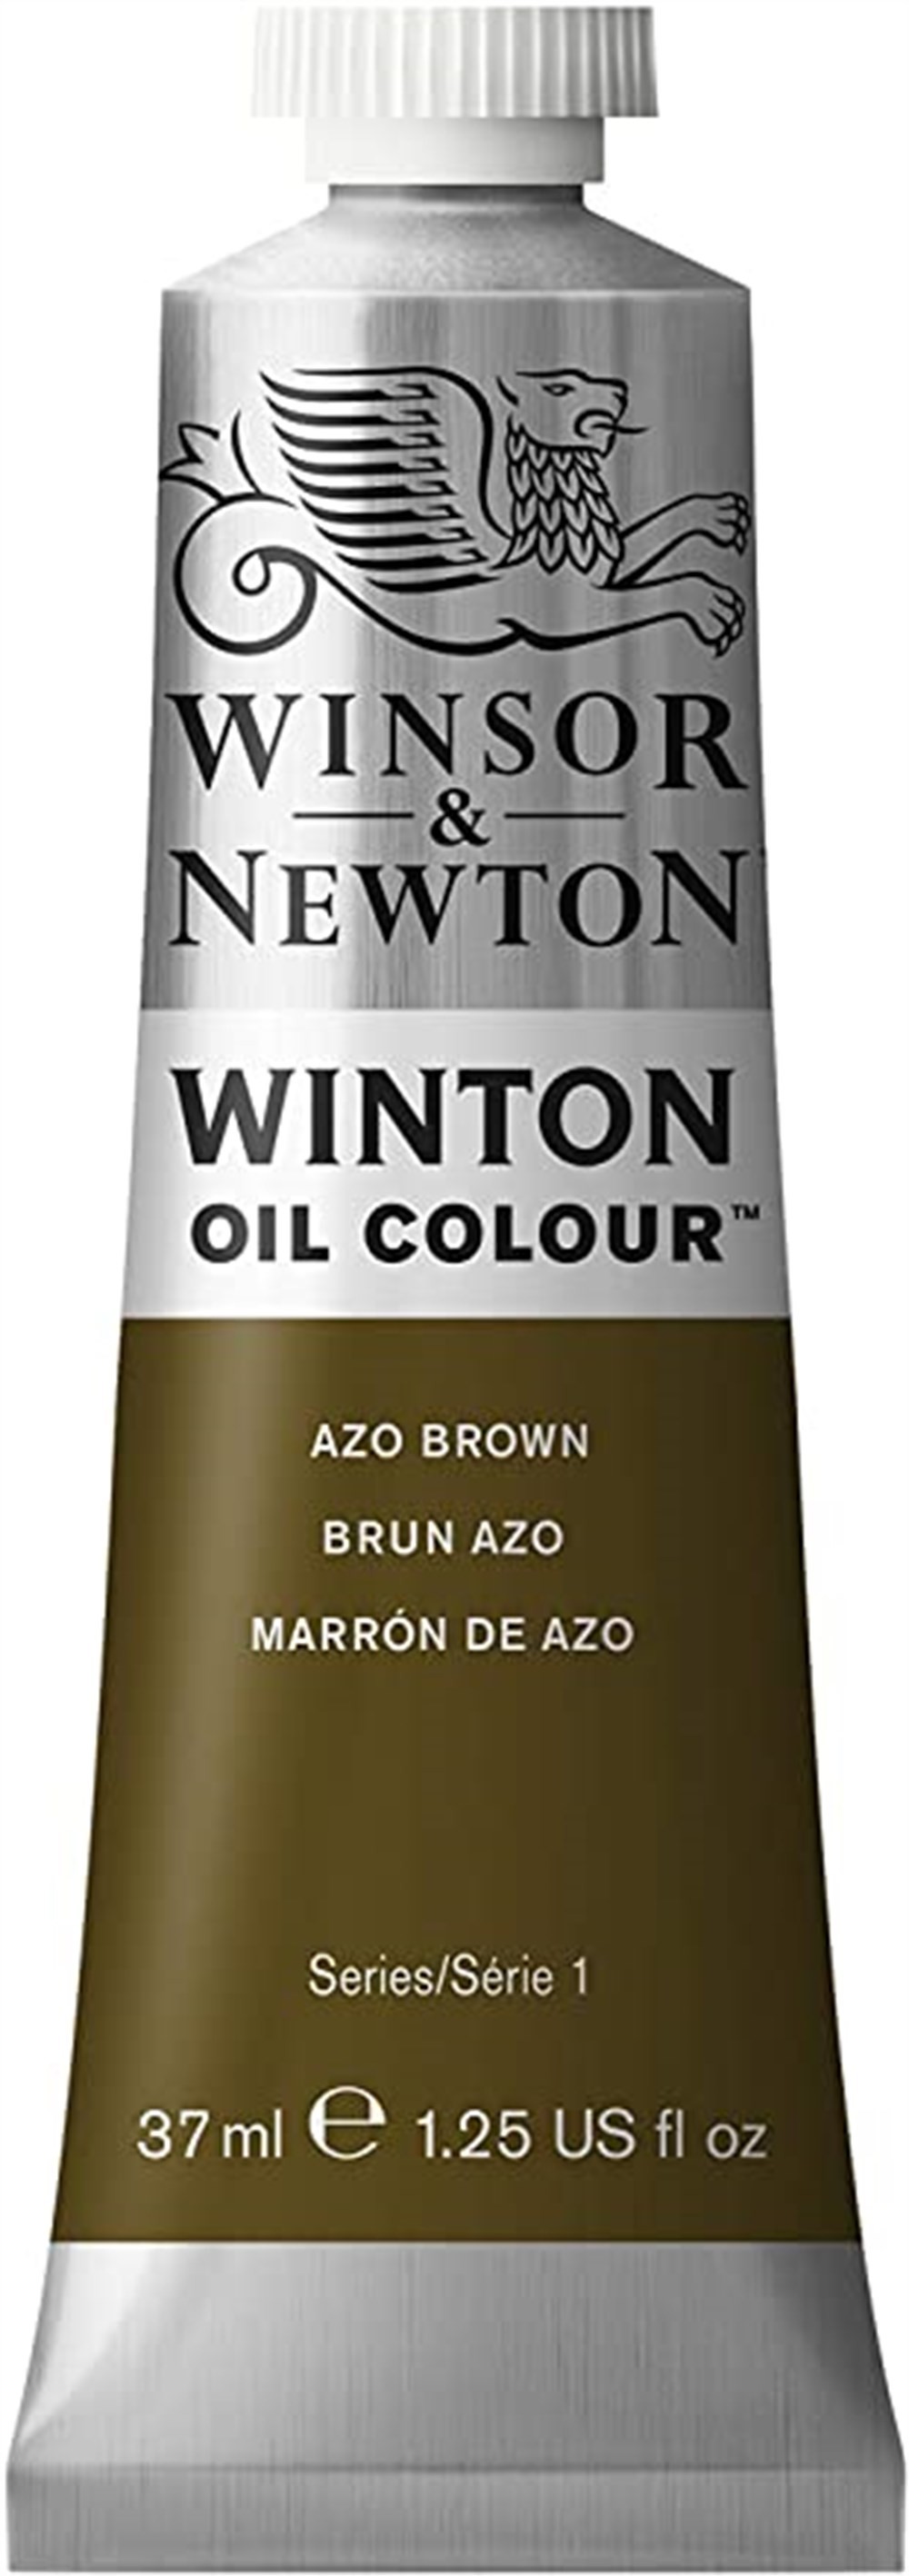 Winsor & Newton Winton Yağlı Boya 37ml Azo Brown